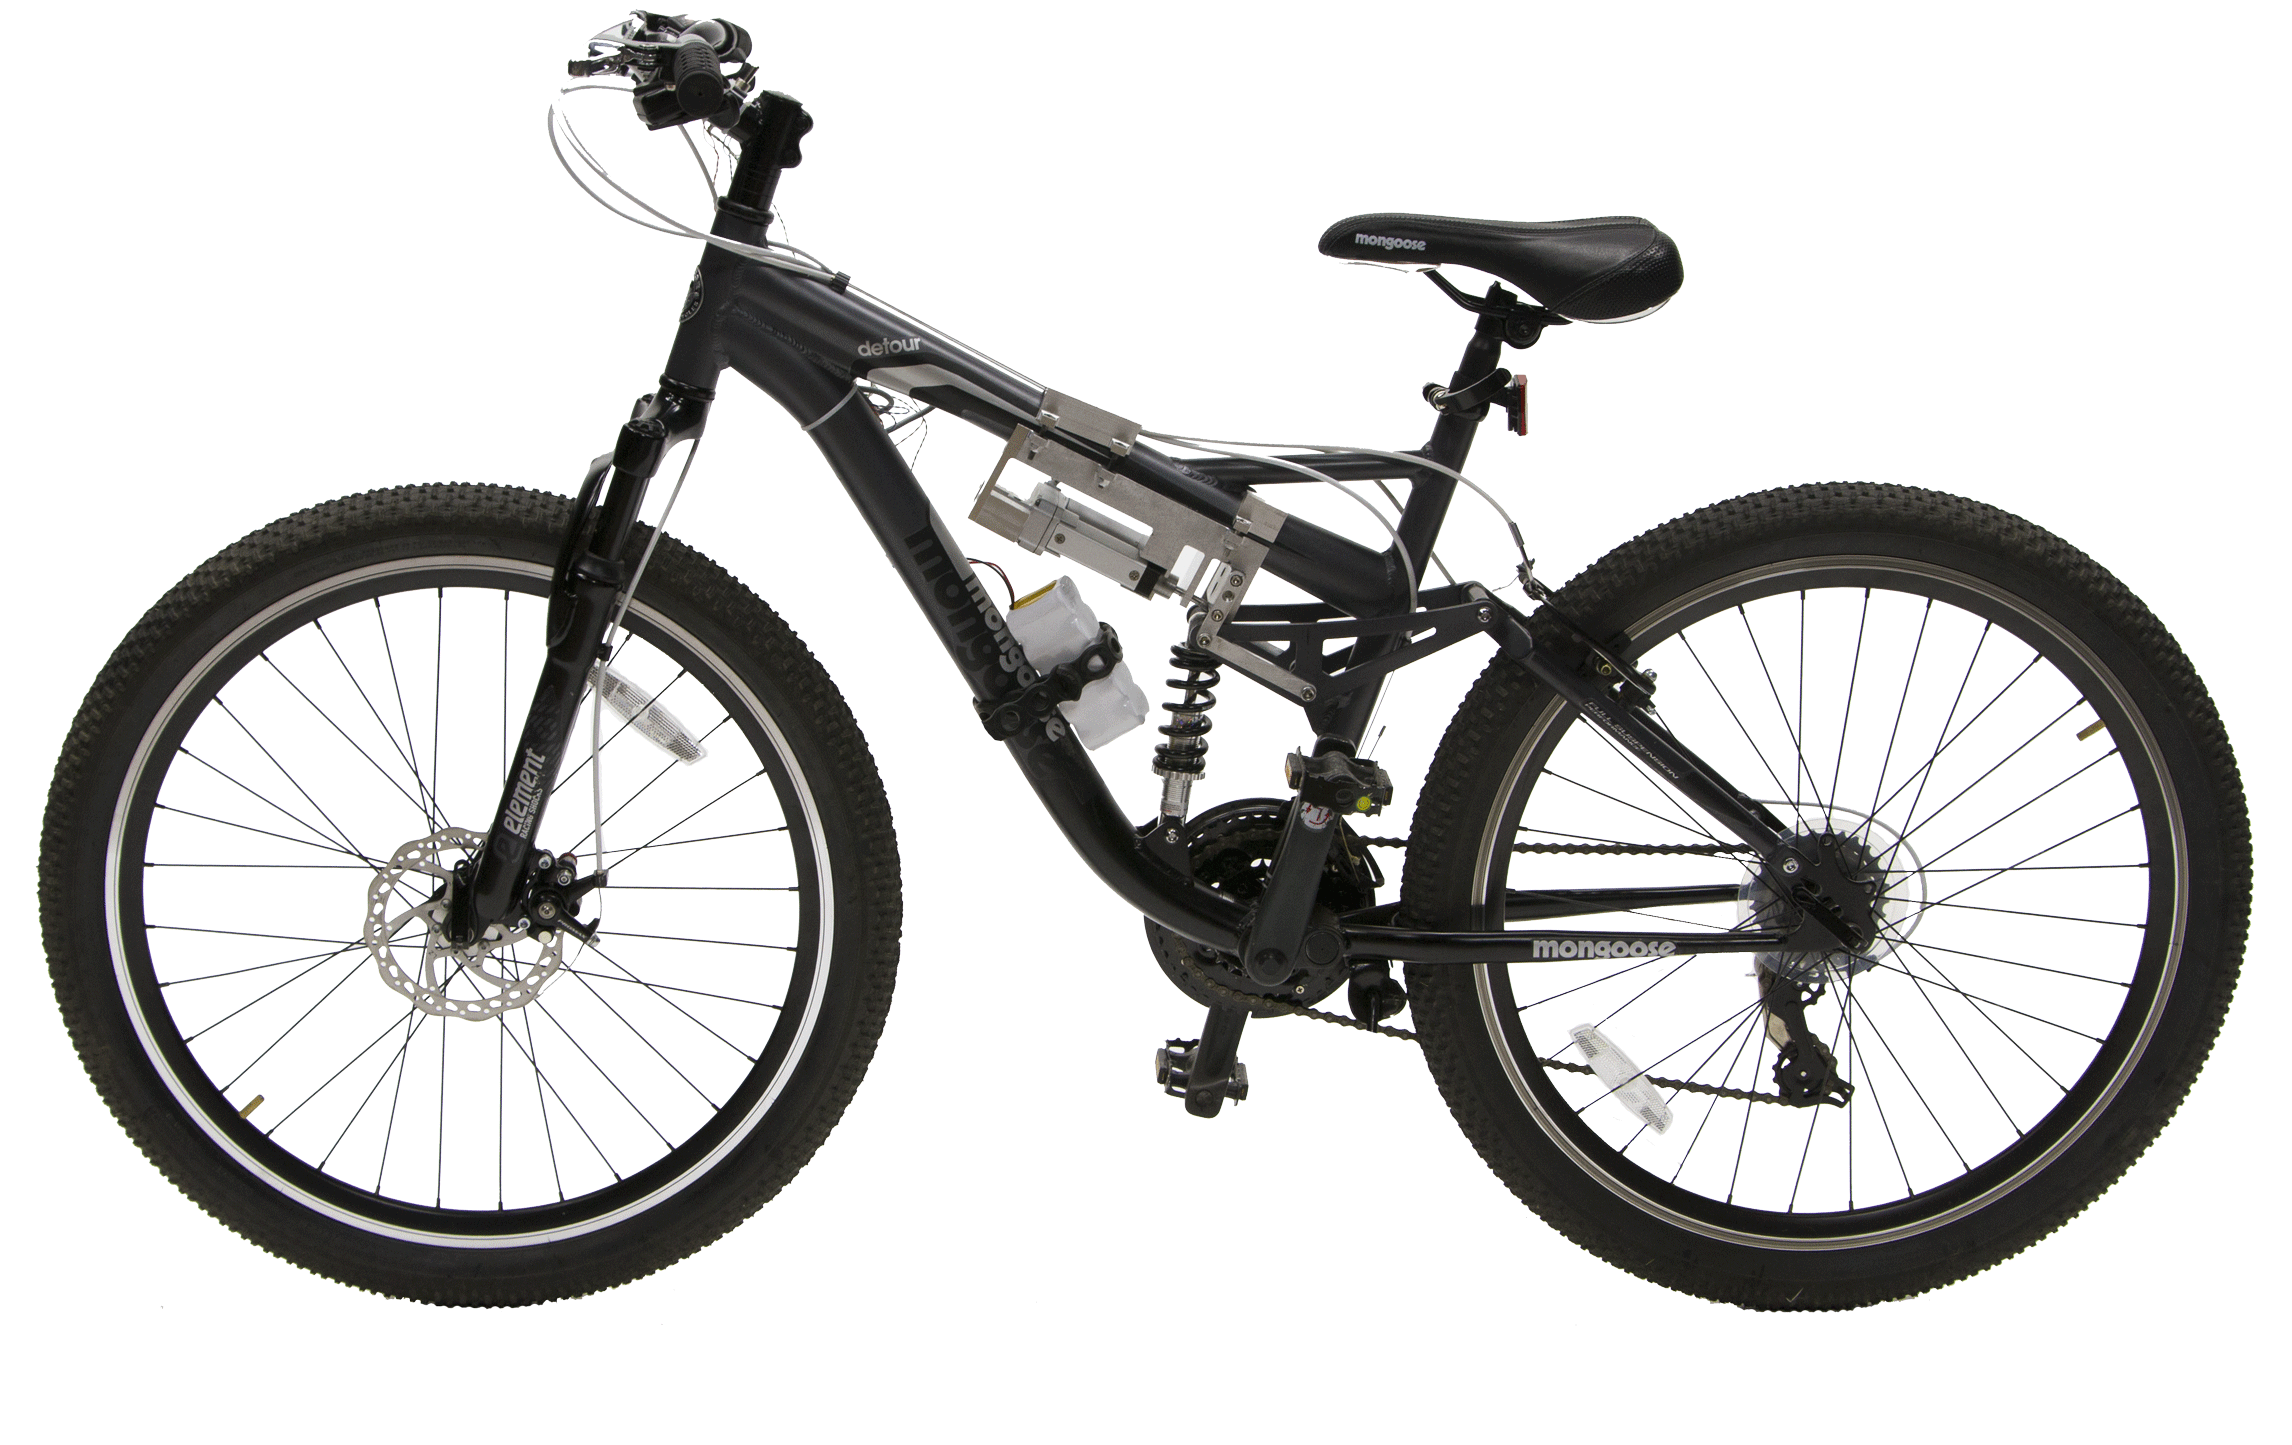 Bicycle PNG Image